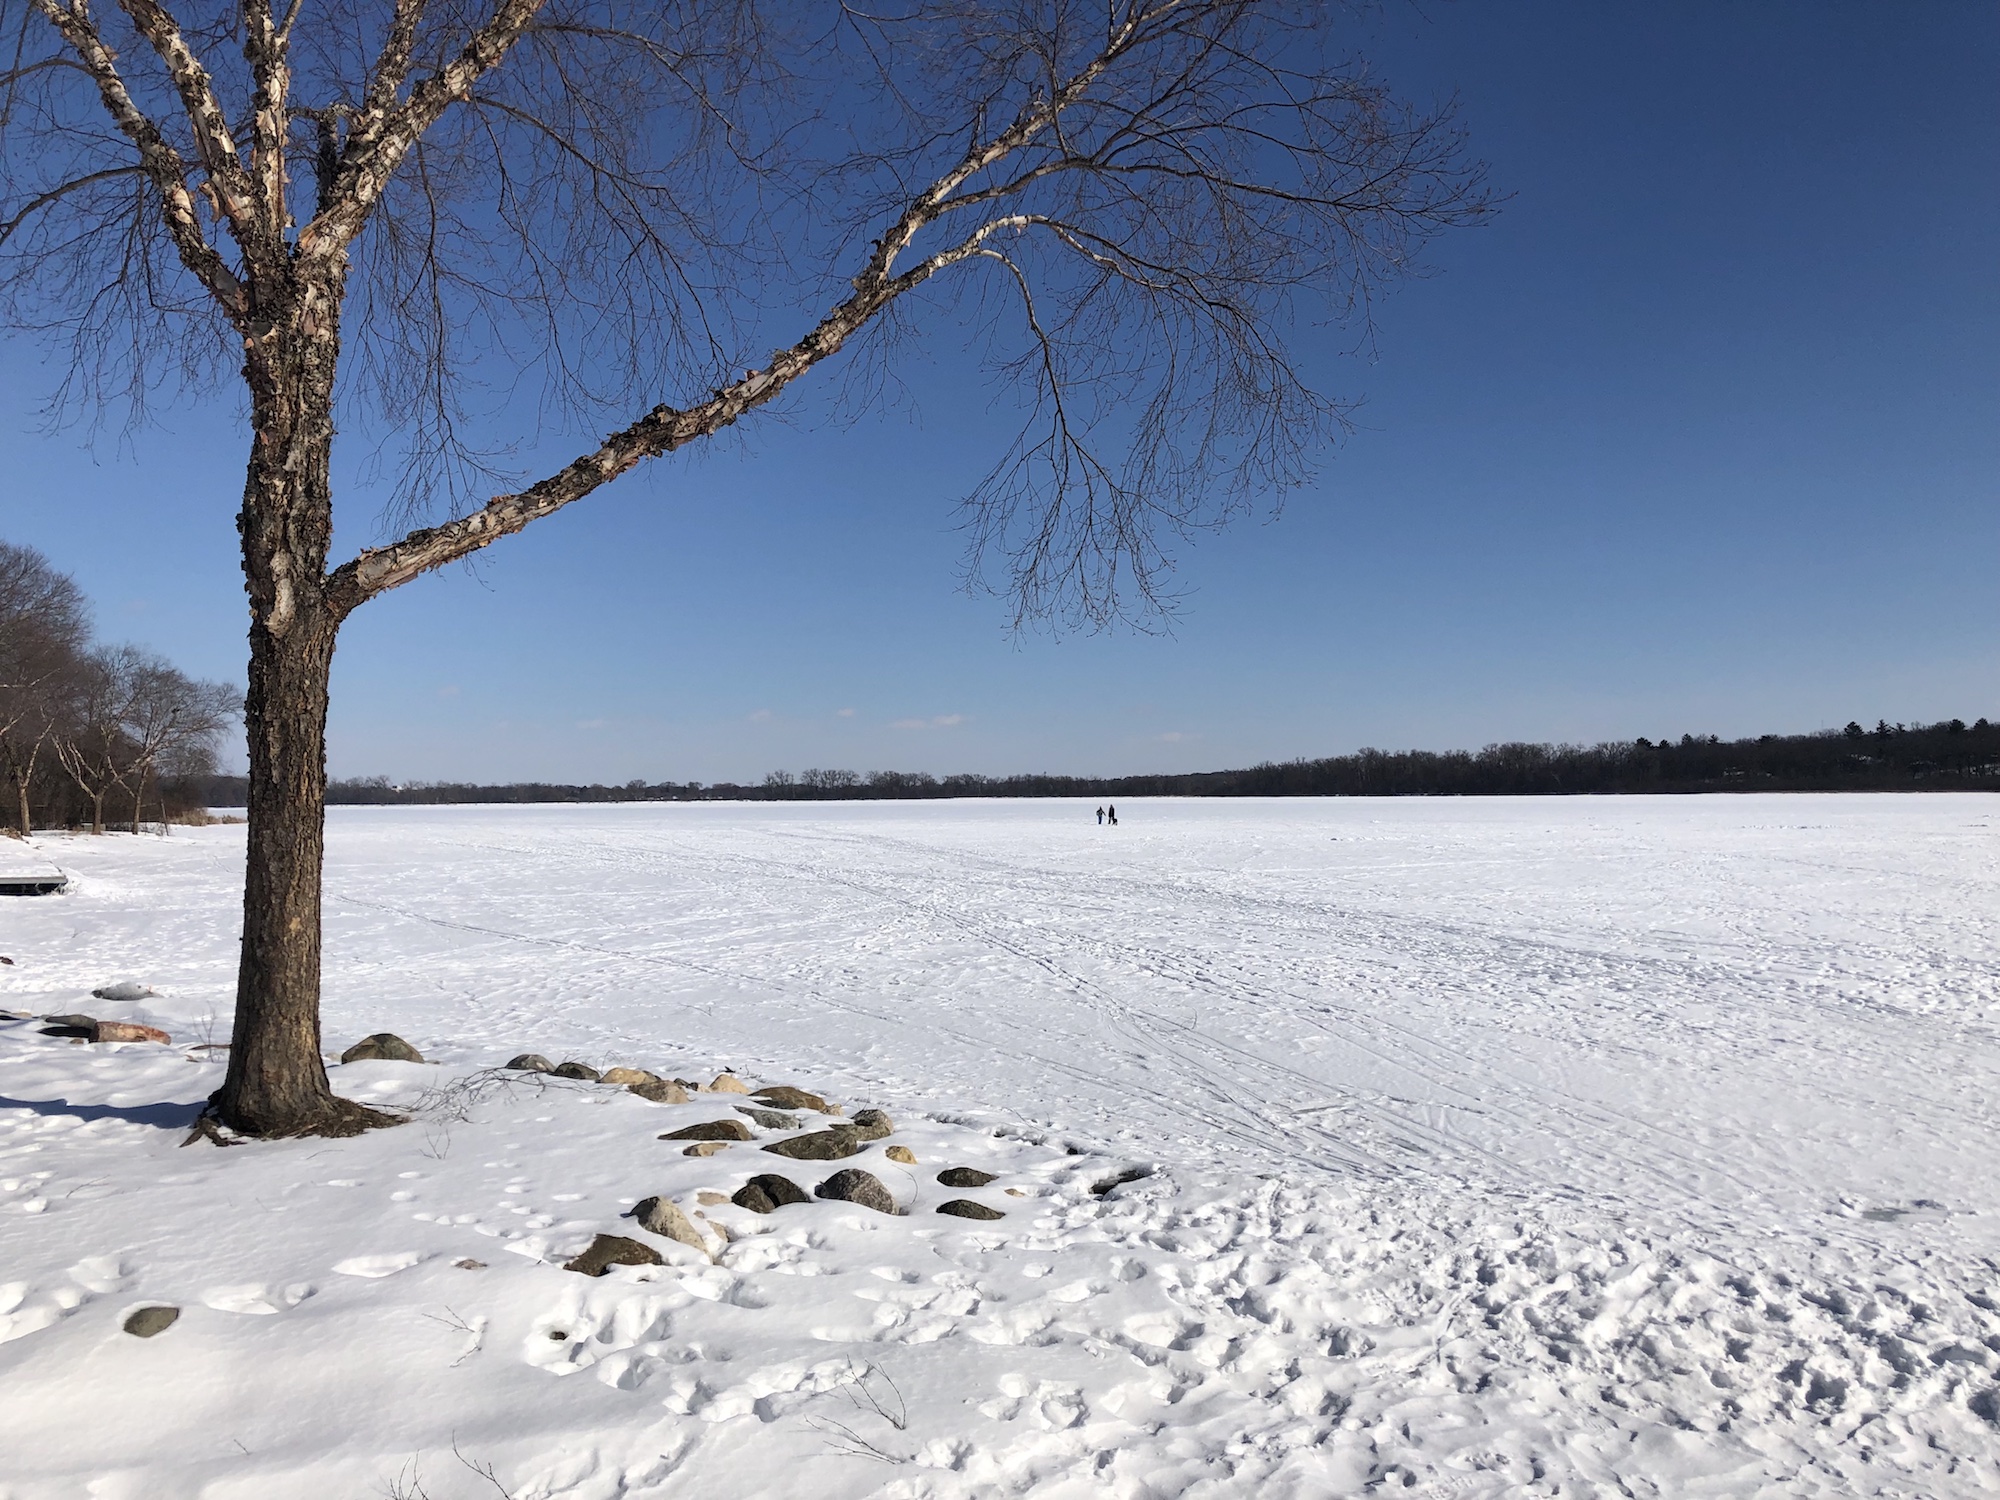 Lake Wingra on March 4, 2019.